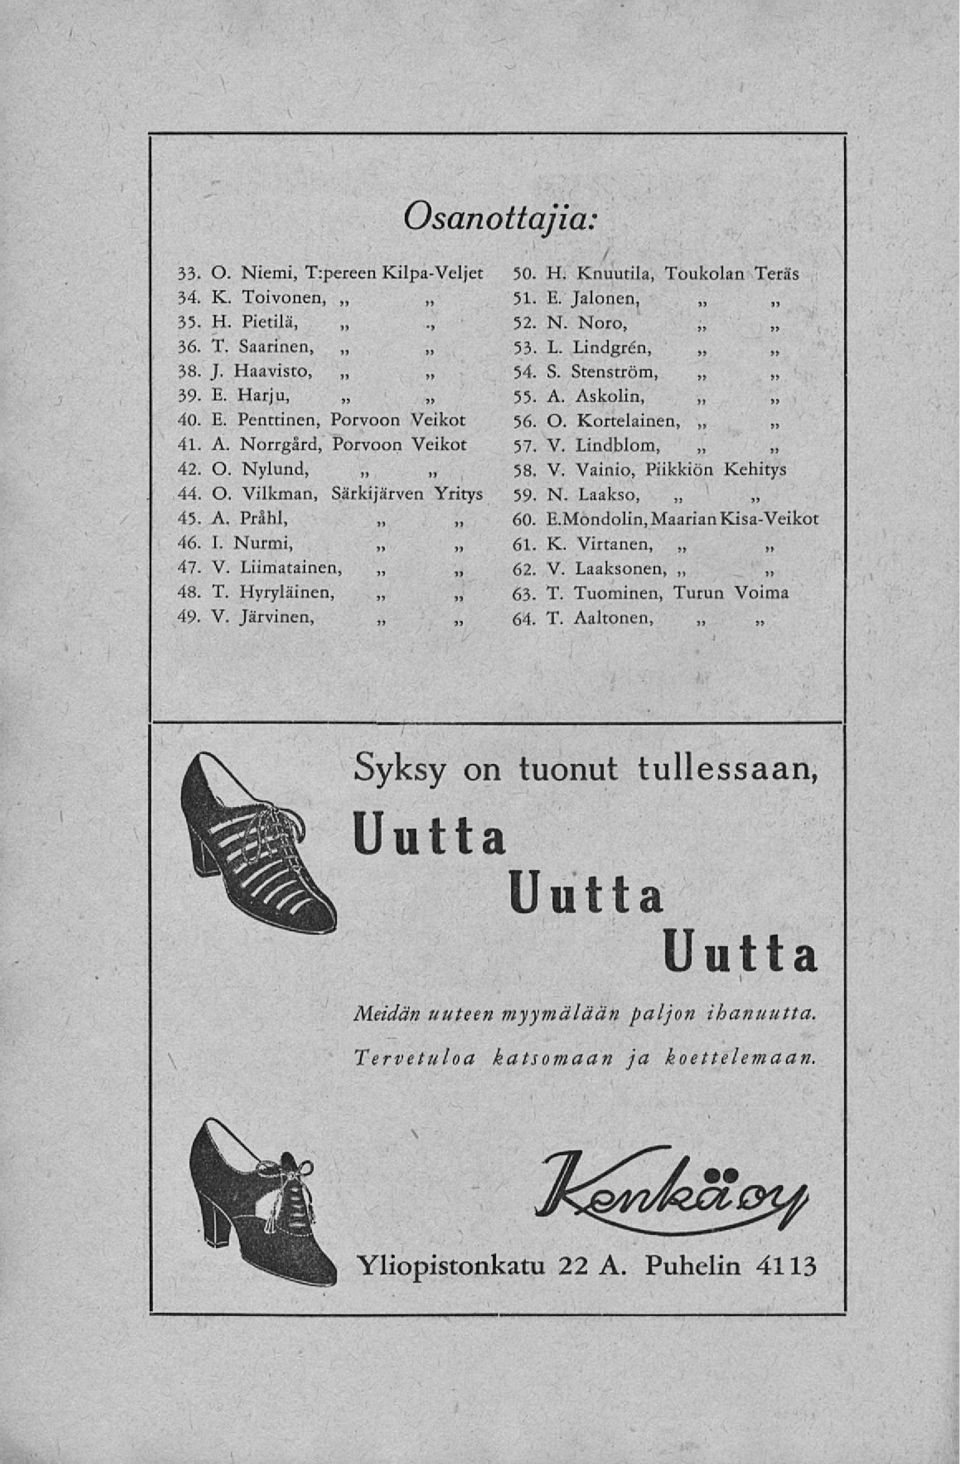 S. Stenström, 55. A. Askolin, 56. O. Kortelainen, 57. V. Lindblom, 58. V. Vainio, Piikkiön Kehitys 59. N. Laakso, 60. E.Mondolin, MaarianKisa-Veikot 61. K. Virranen, 62. V. Laaksonen, 63. T.